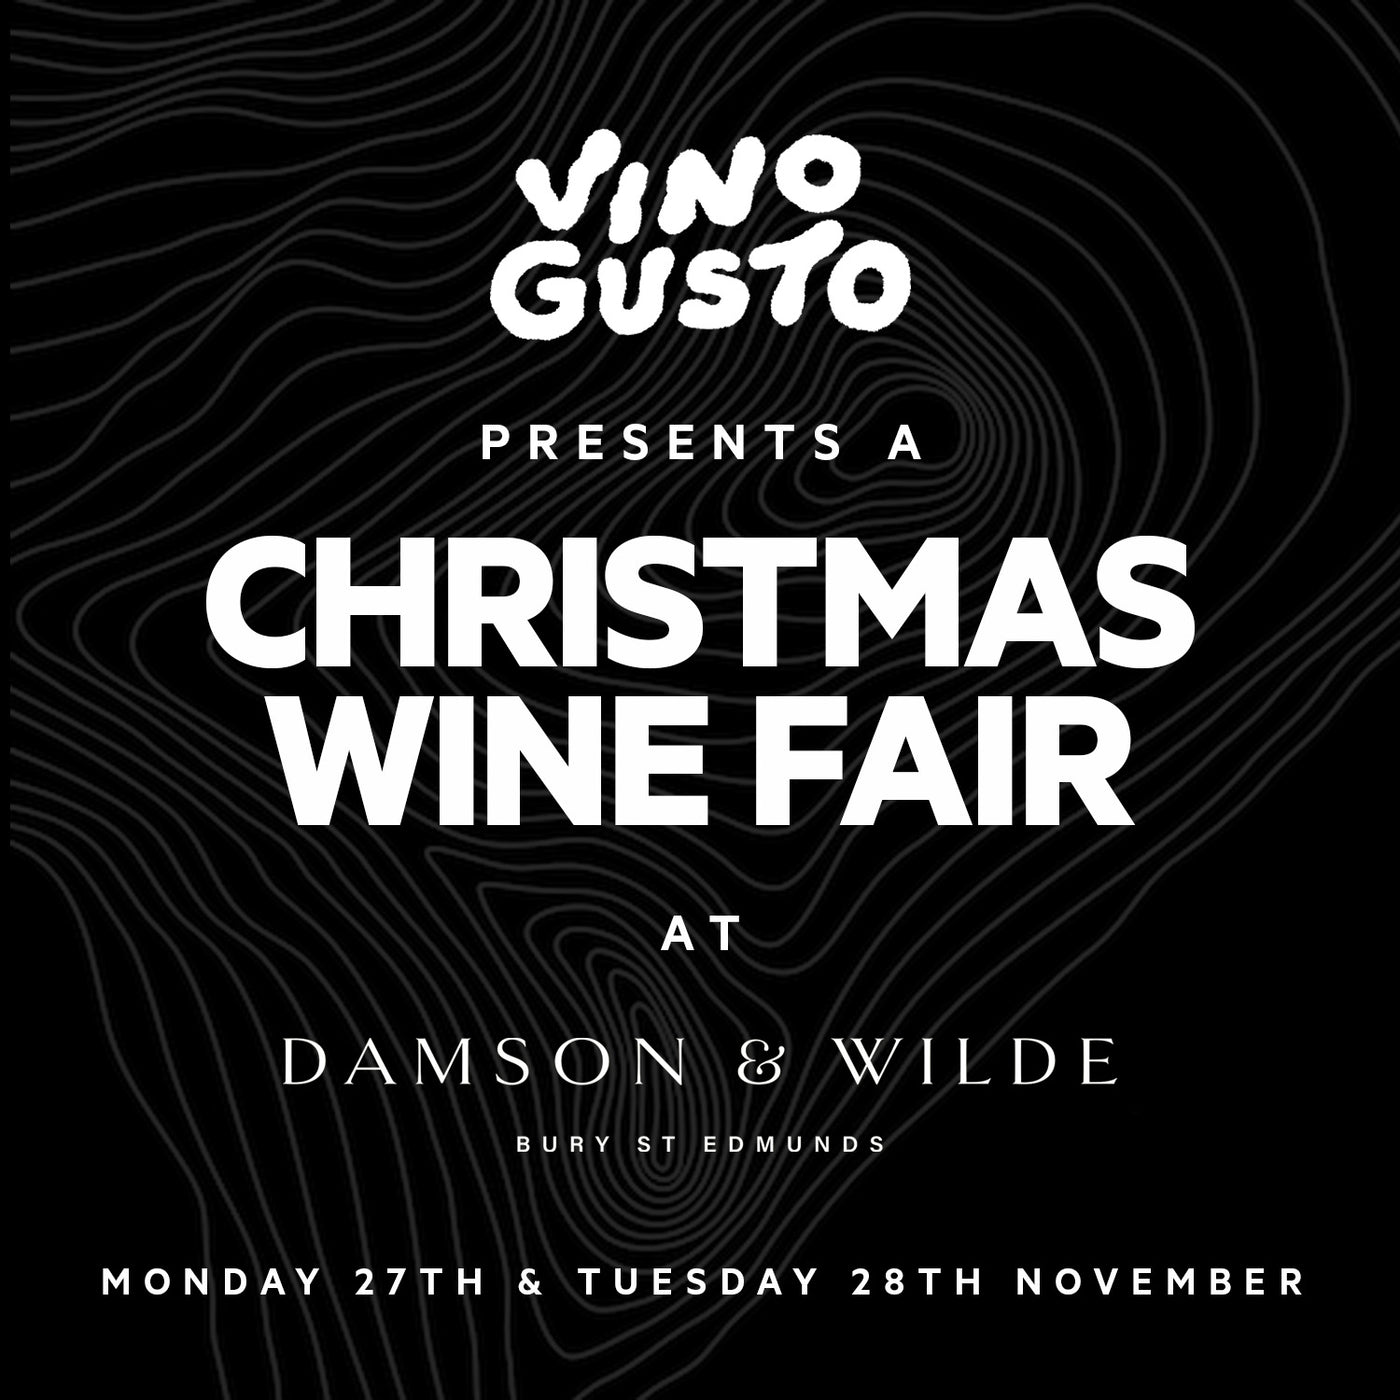 Vino Gusto Christmas Wine Fair // Monday 27th November // Session Two: 6-9:30pm